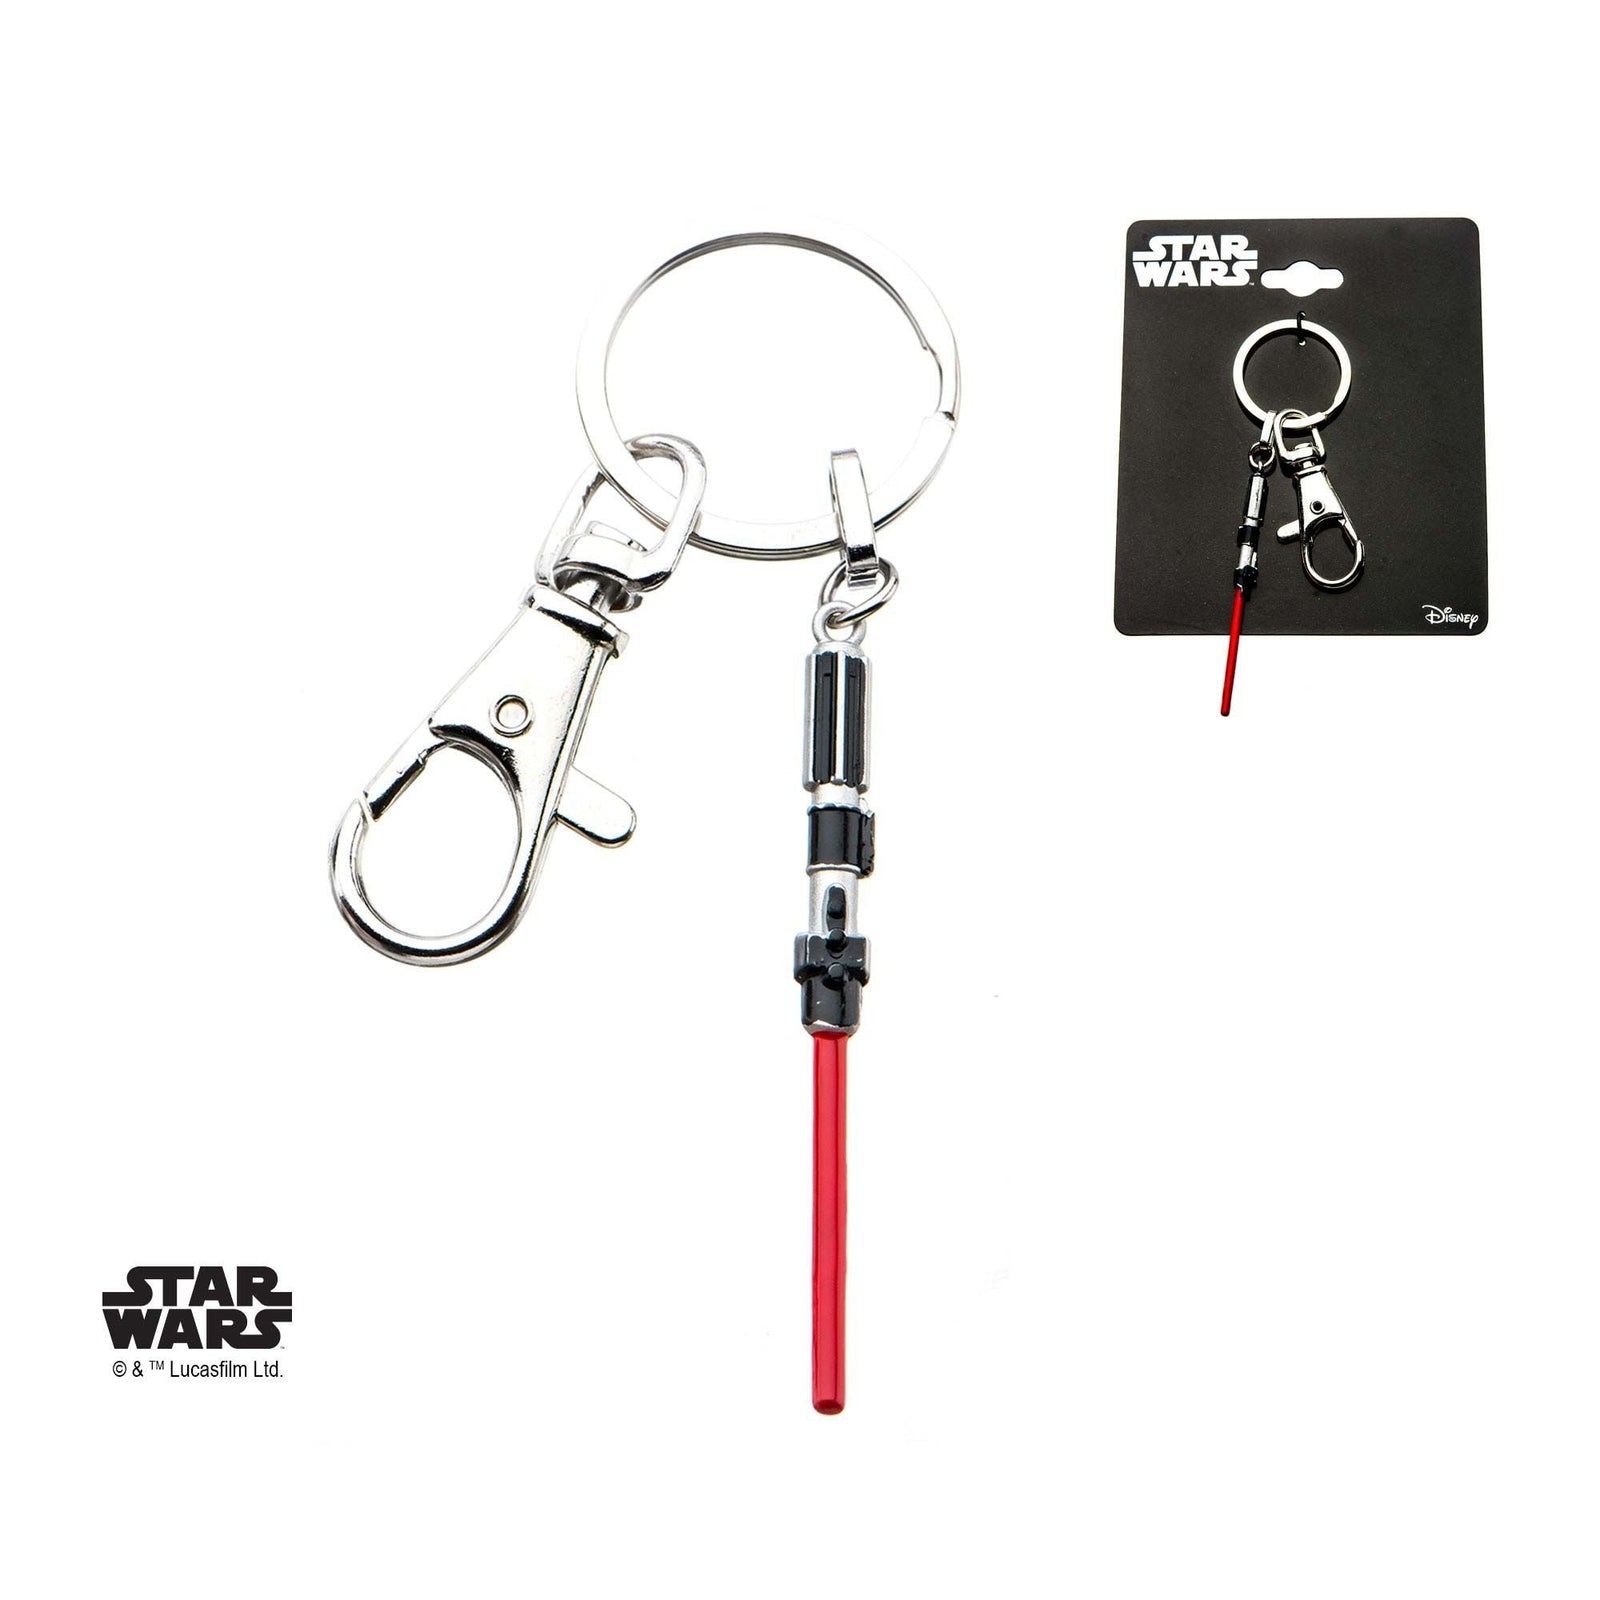 STAR WARS Star Wars Darth Vader Lightsaber Key Chain A -Rebel Bod-RebelBod